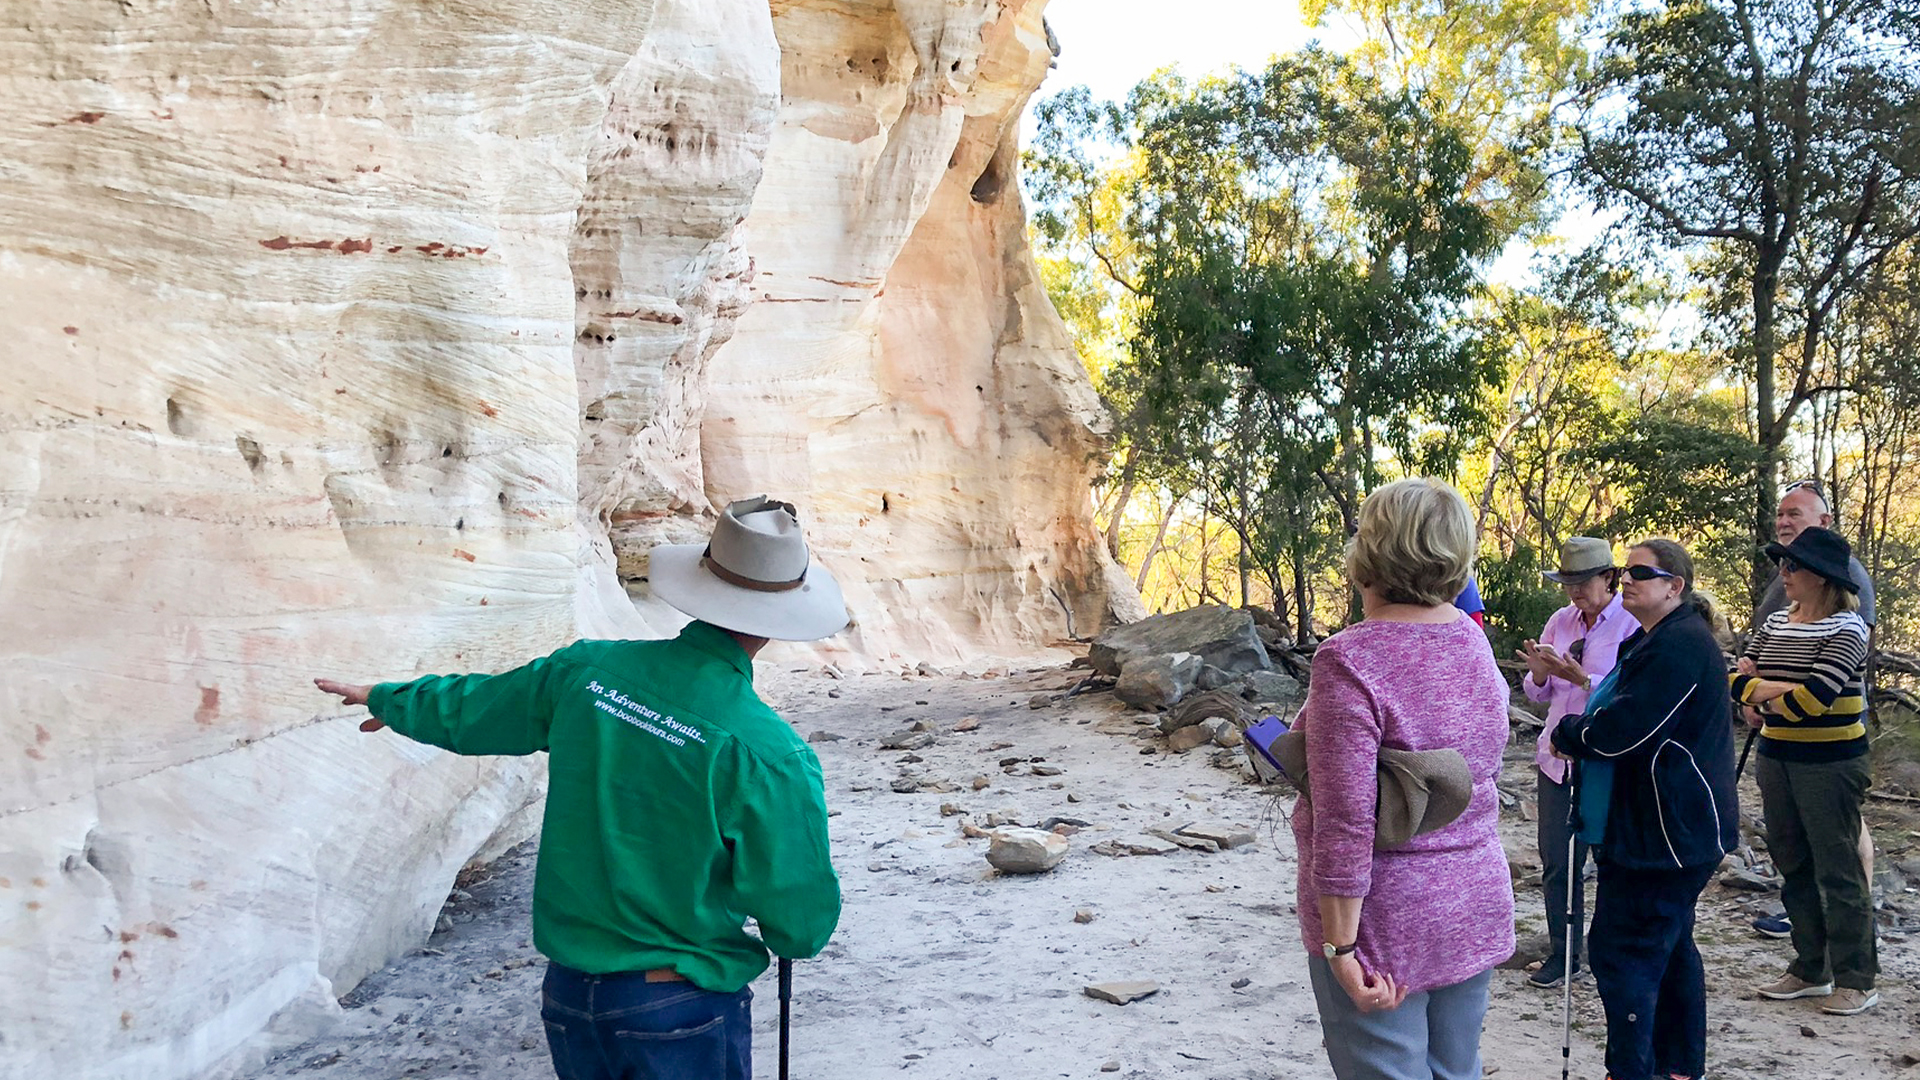 A tour guide showing guests a sandstone rock face